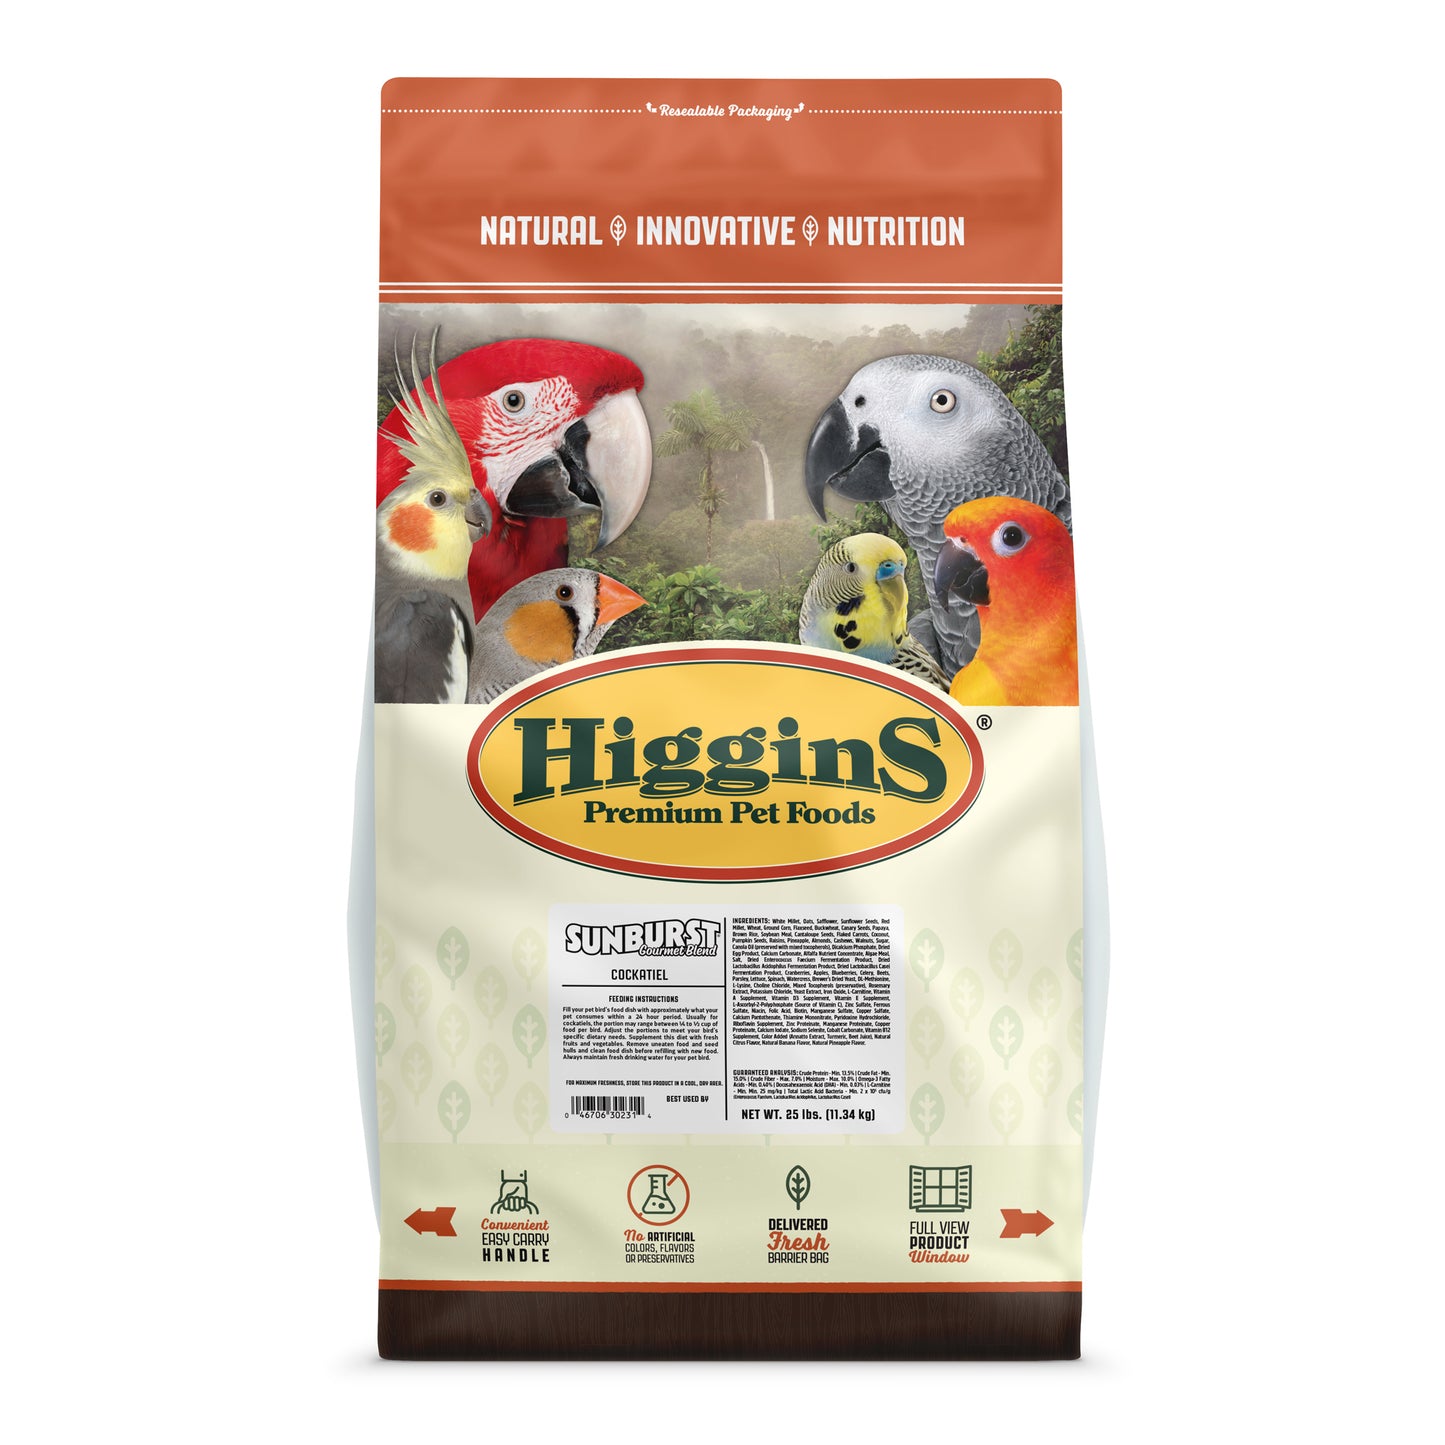 Higgins Sunburst Gourmet Blend Cockatiel Food